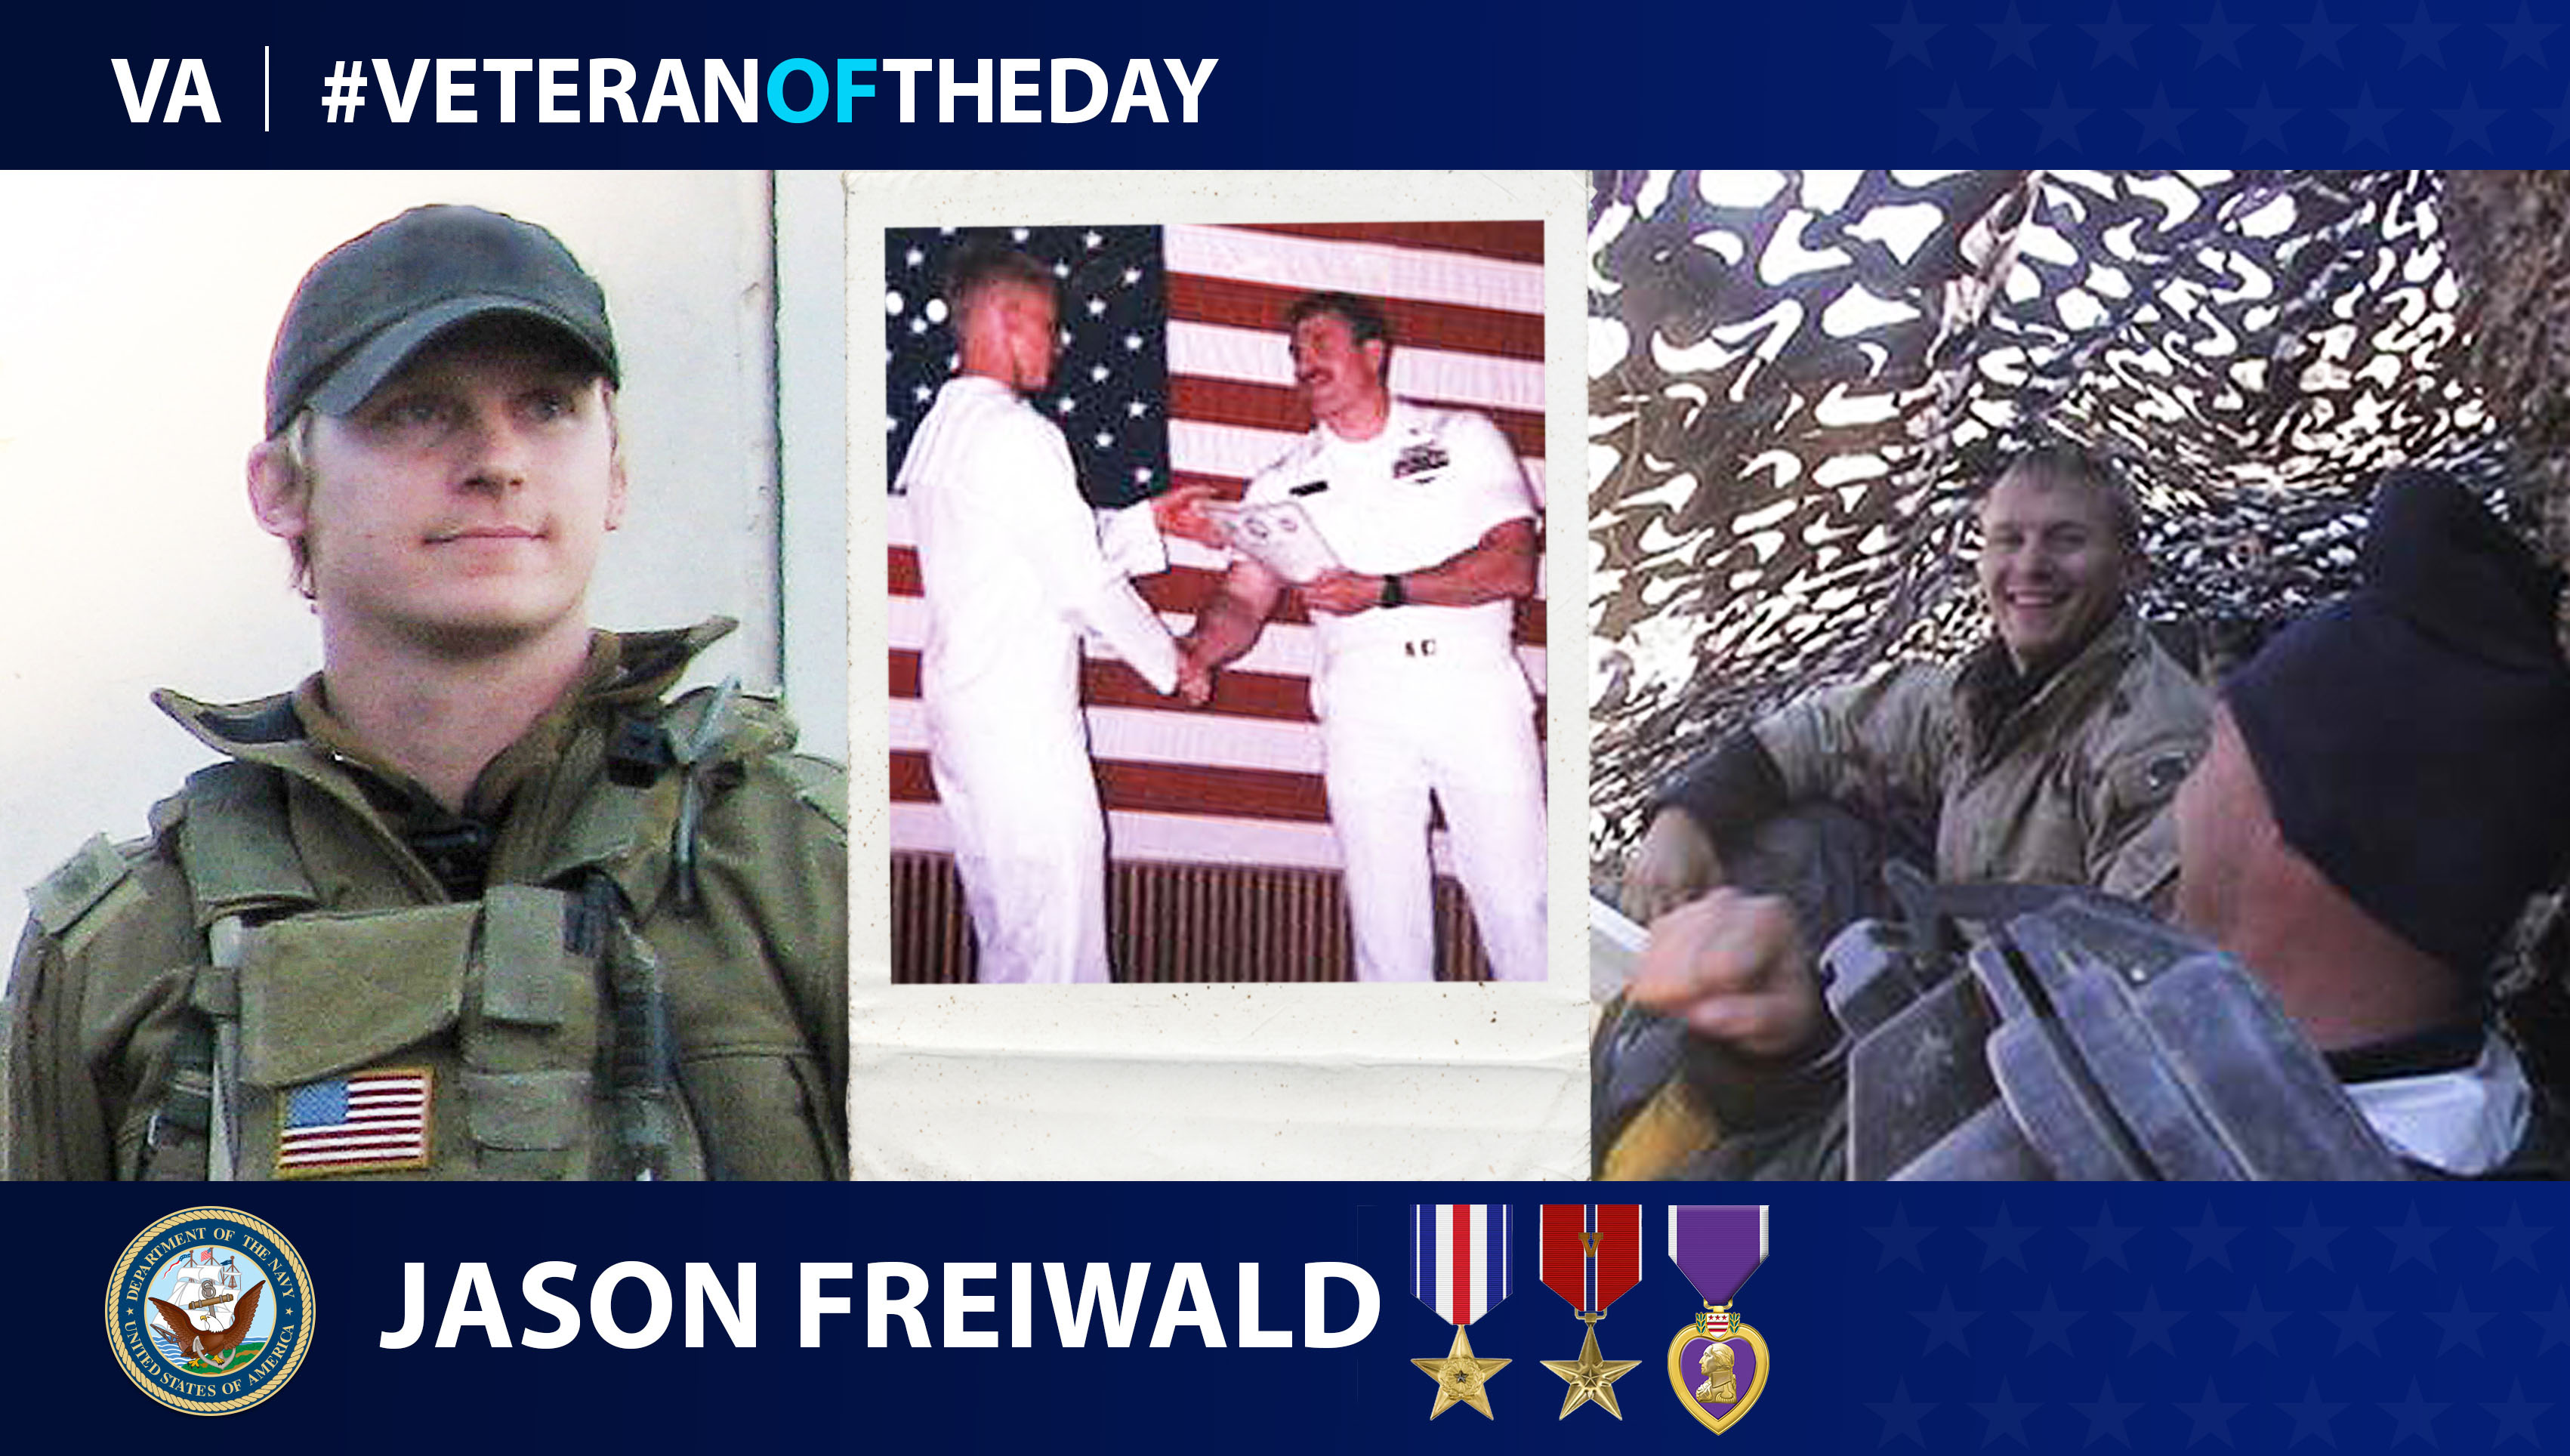 Navy Veteran Jason Freiwald is today's Veteran of the Day.